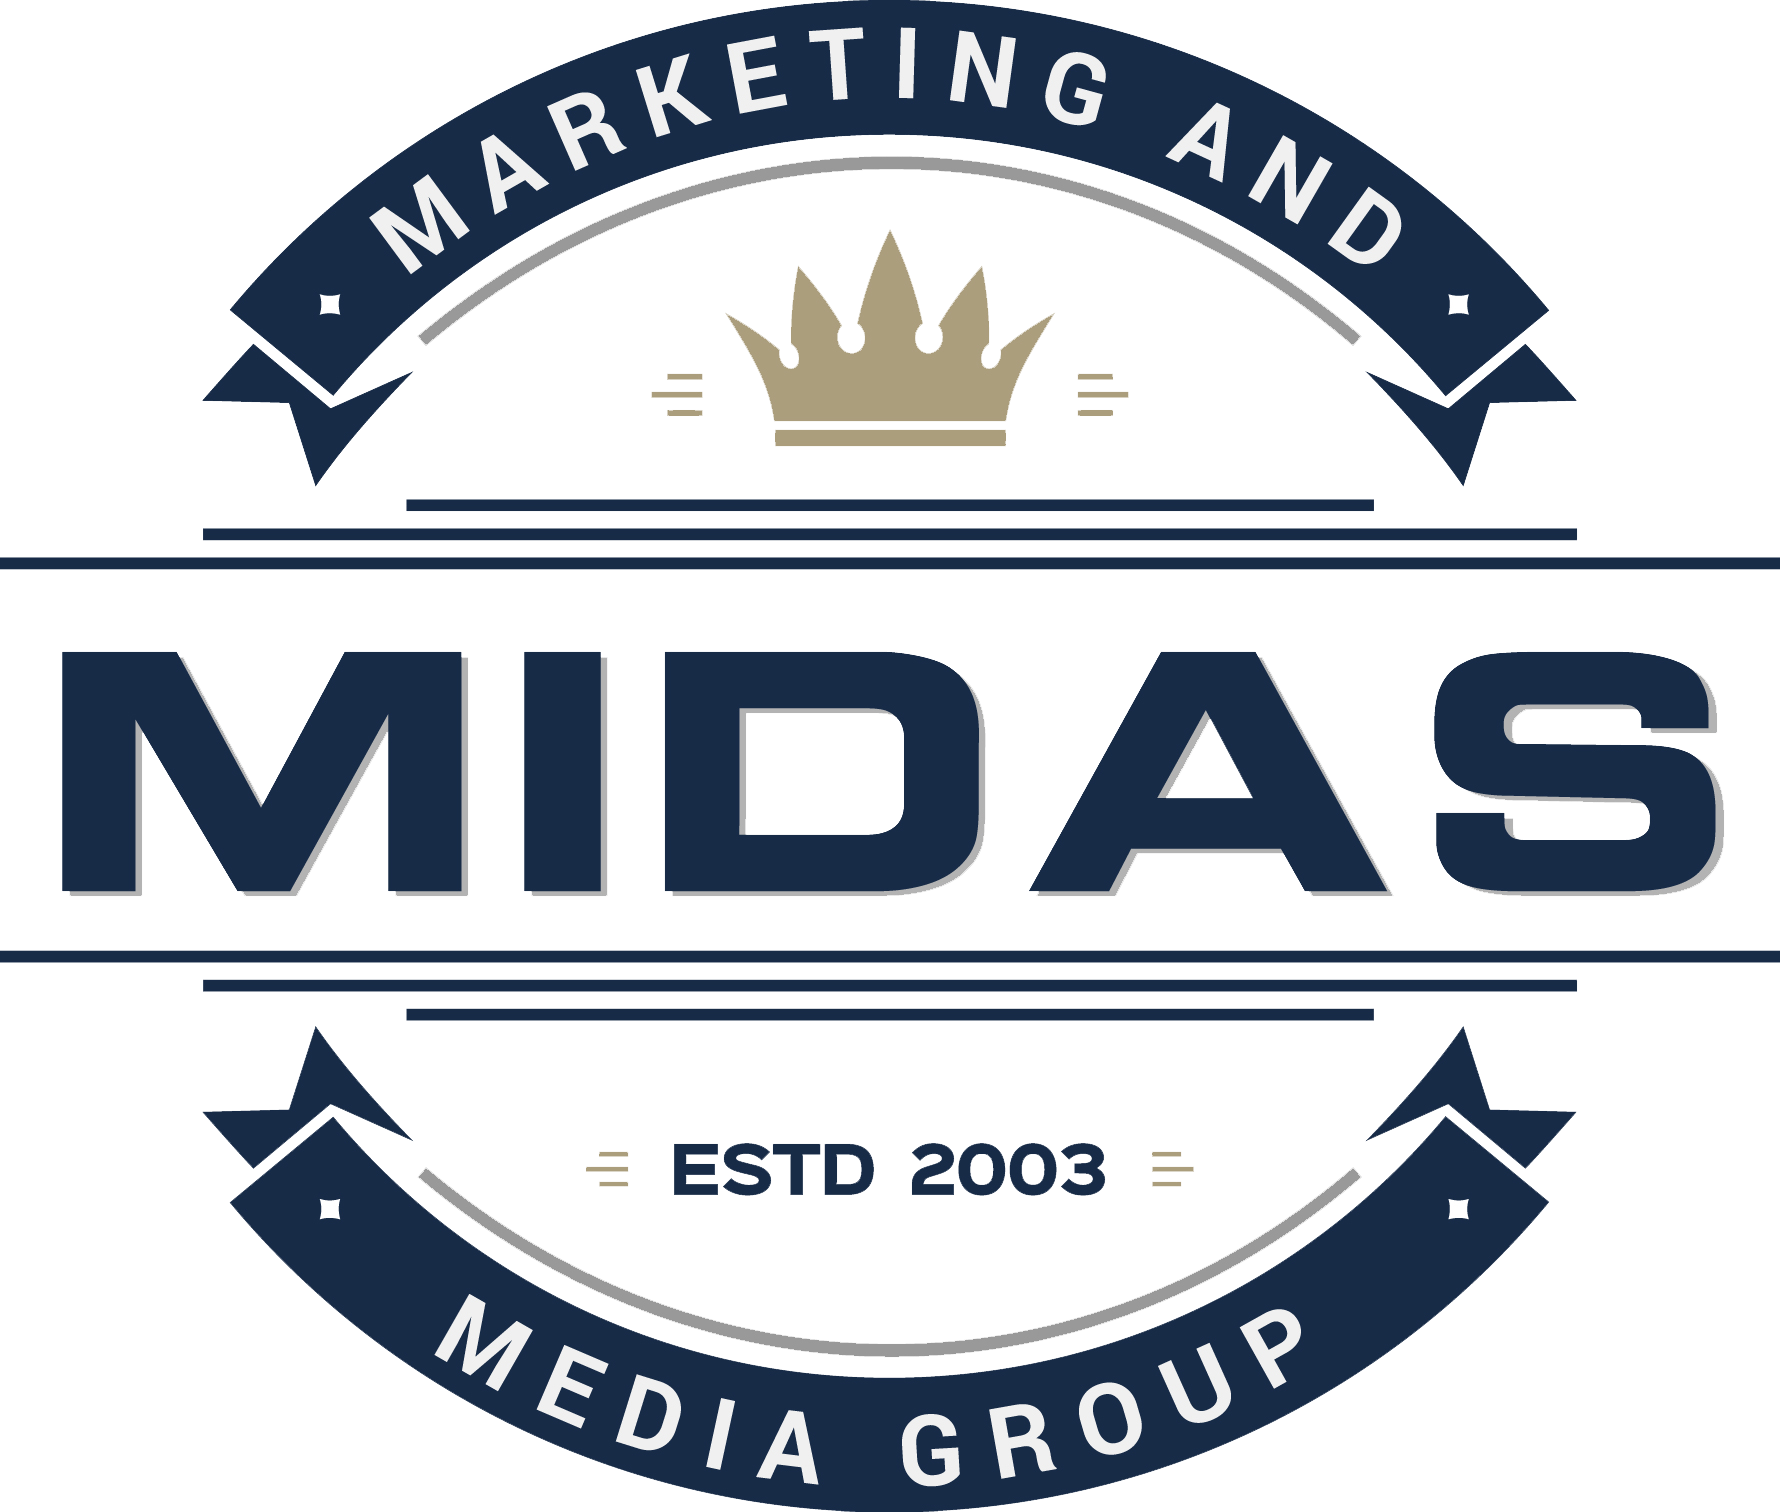 Midas Marketing and Media Group